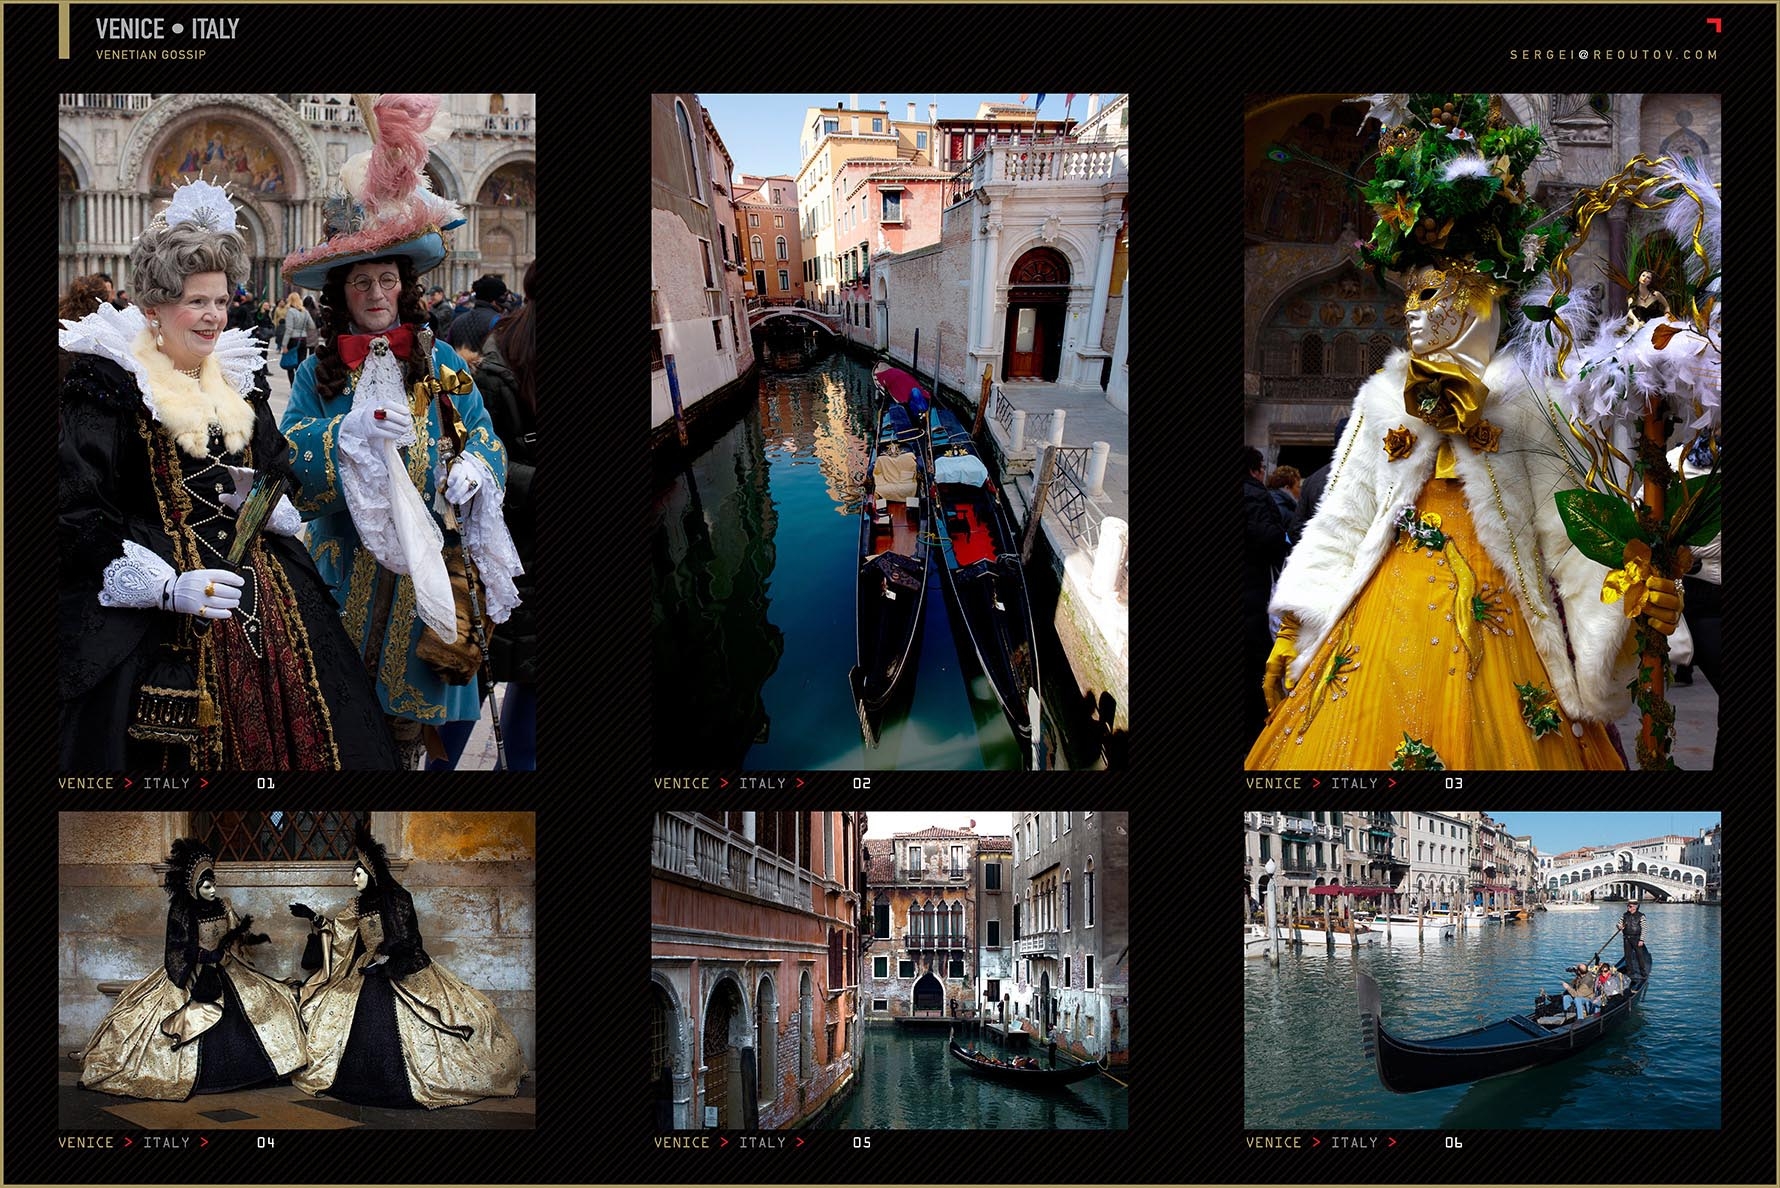 Venetian postcards